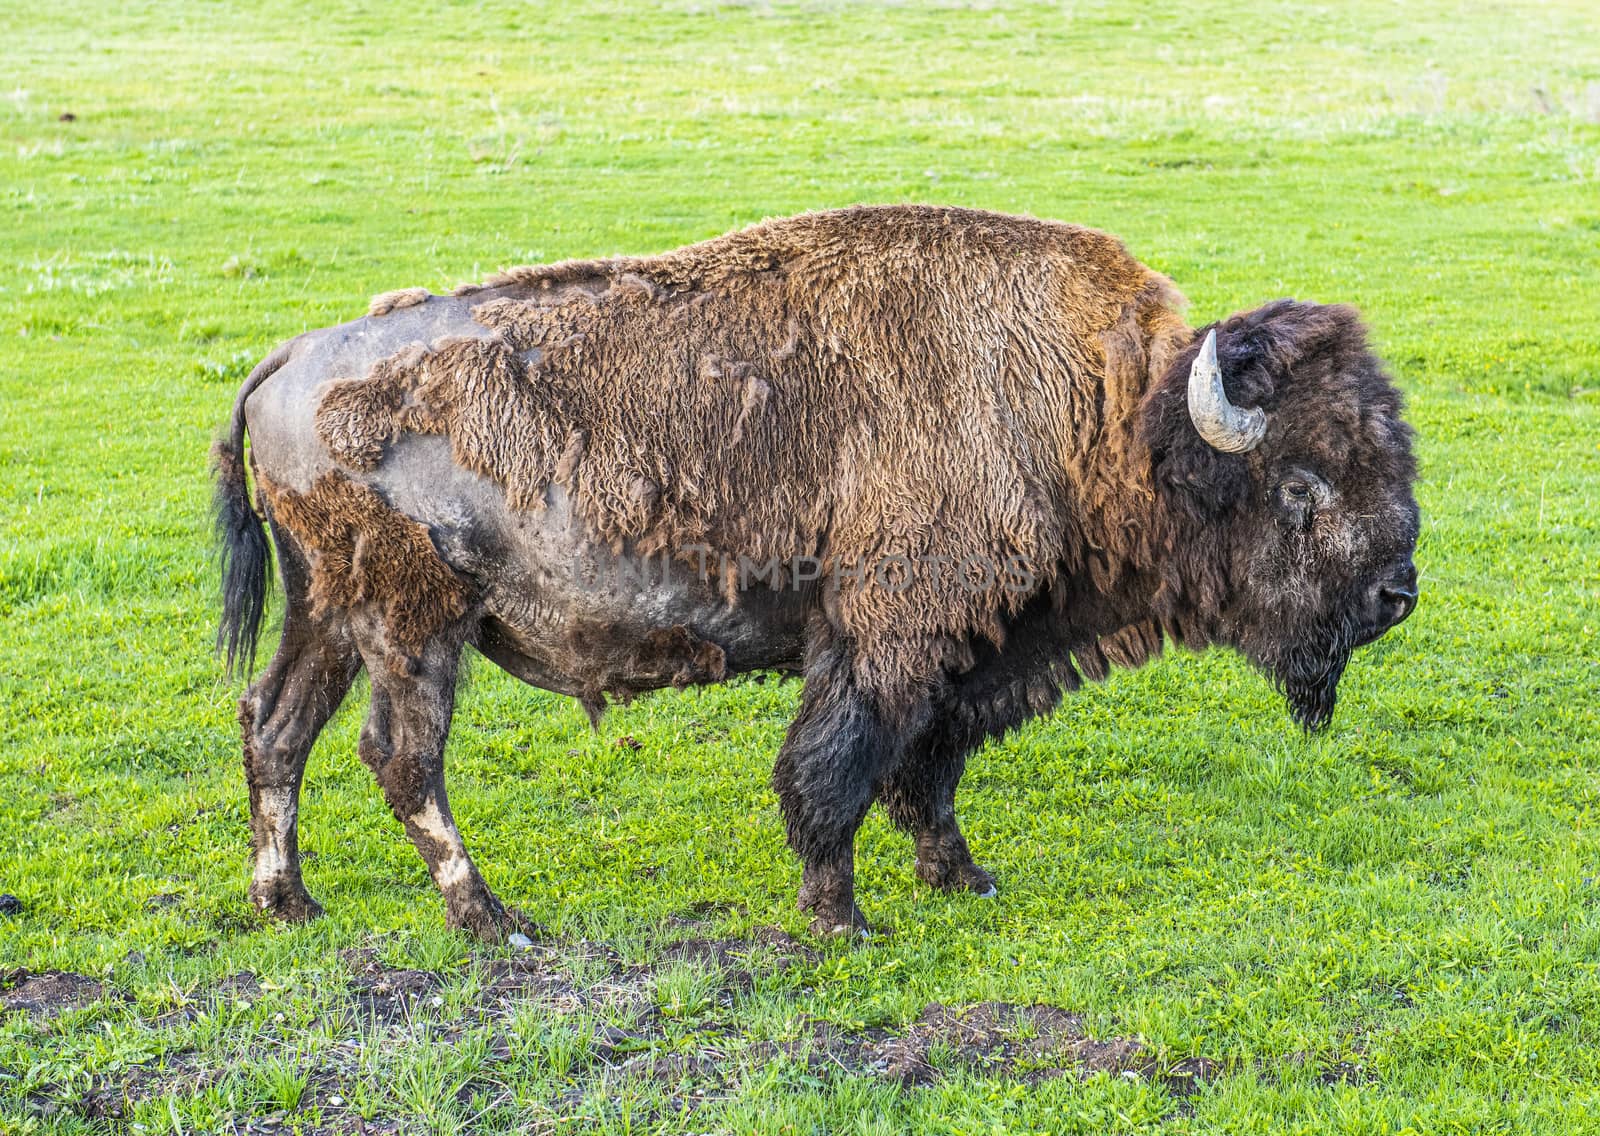 Buffalo bull in Yellowstone by fyletto